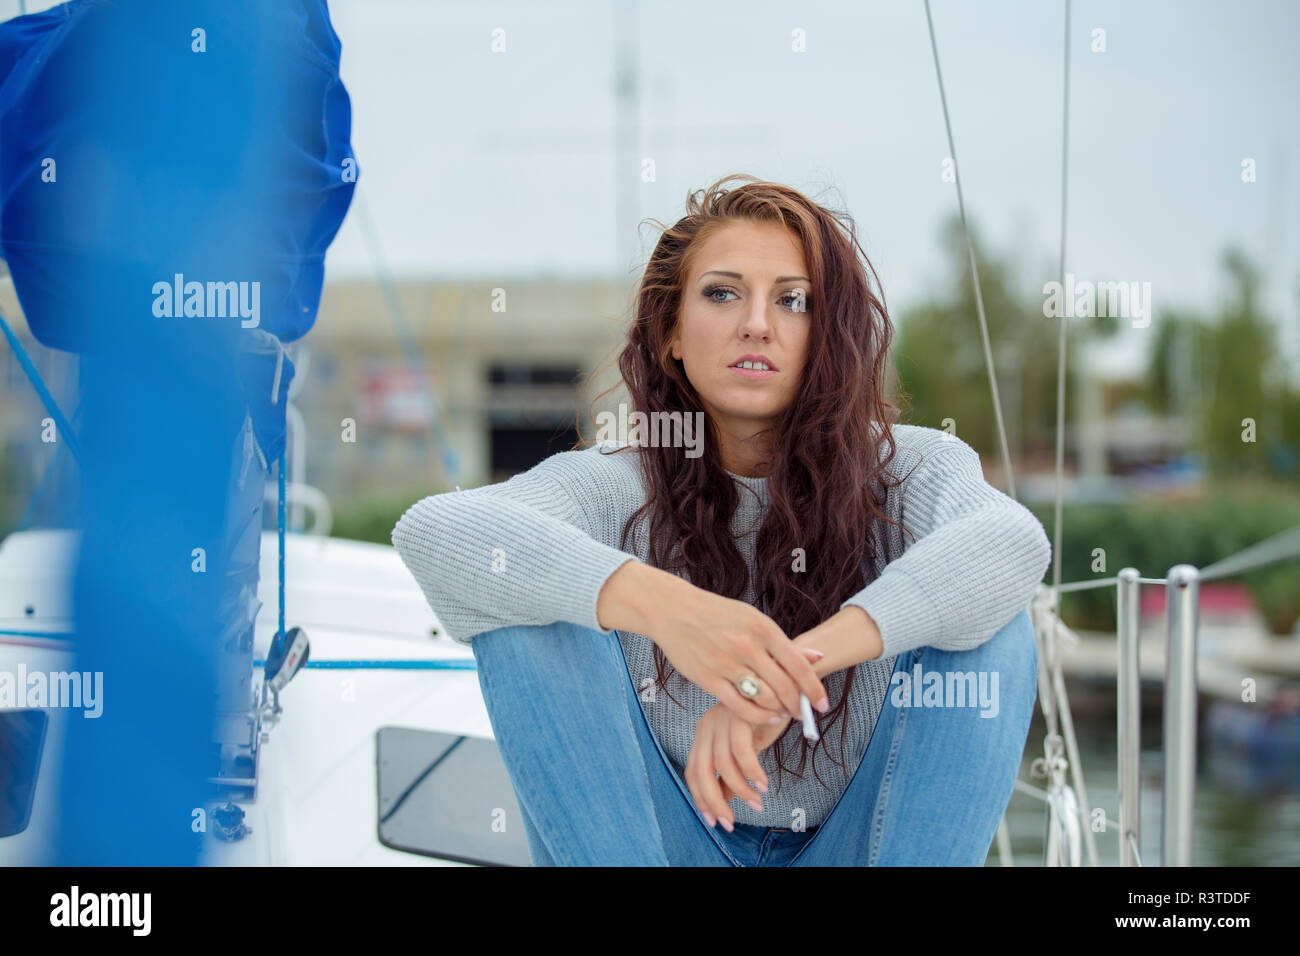 Woman sitting on sailing boat, waiting, smoking cigarette Stock Photo